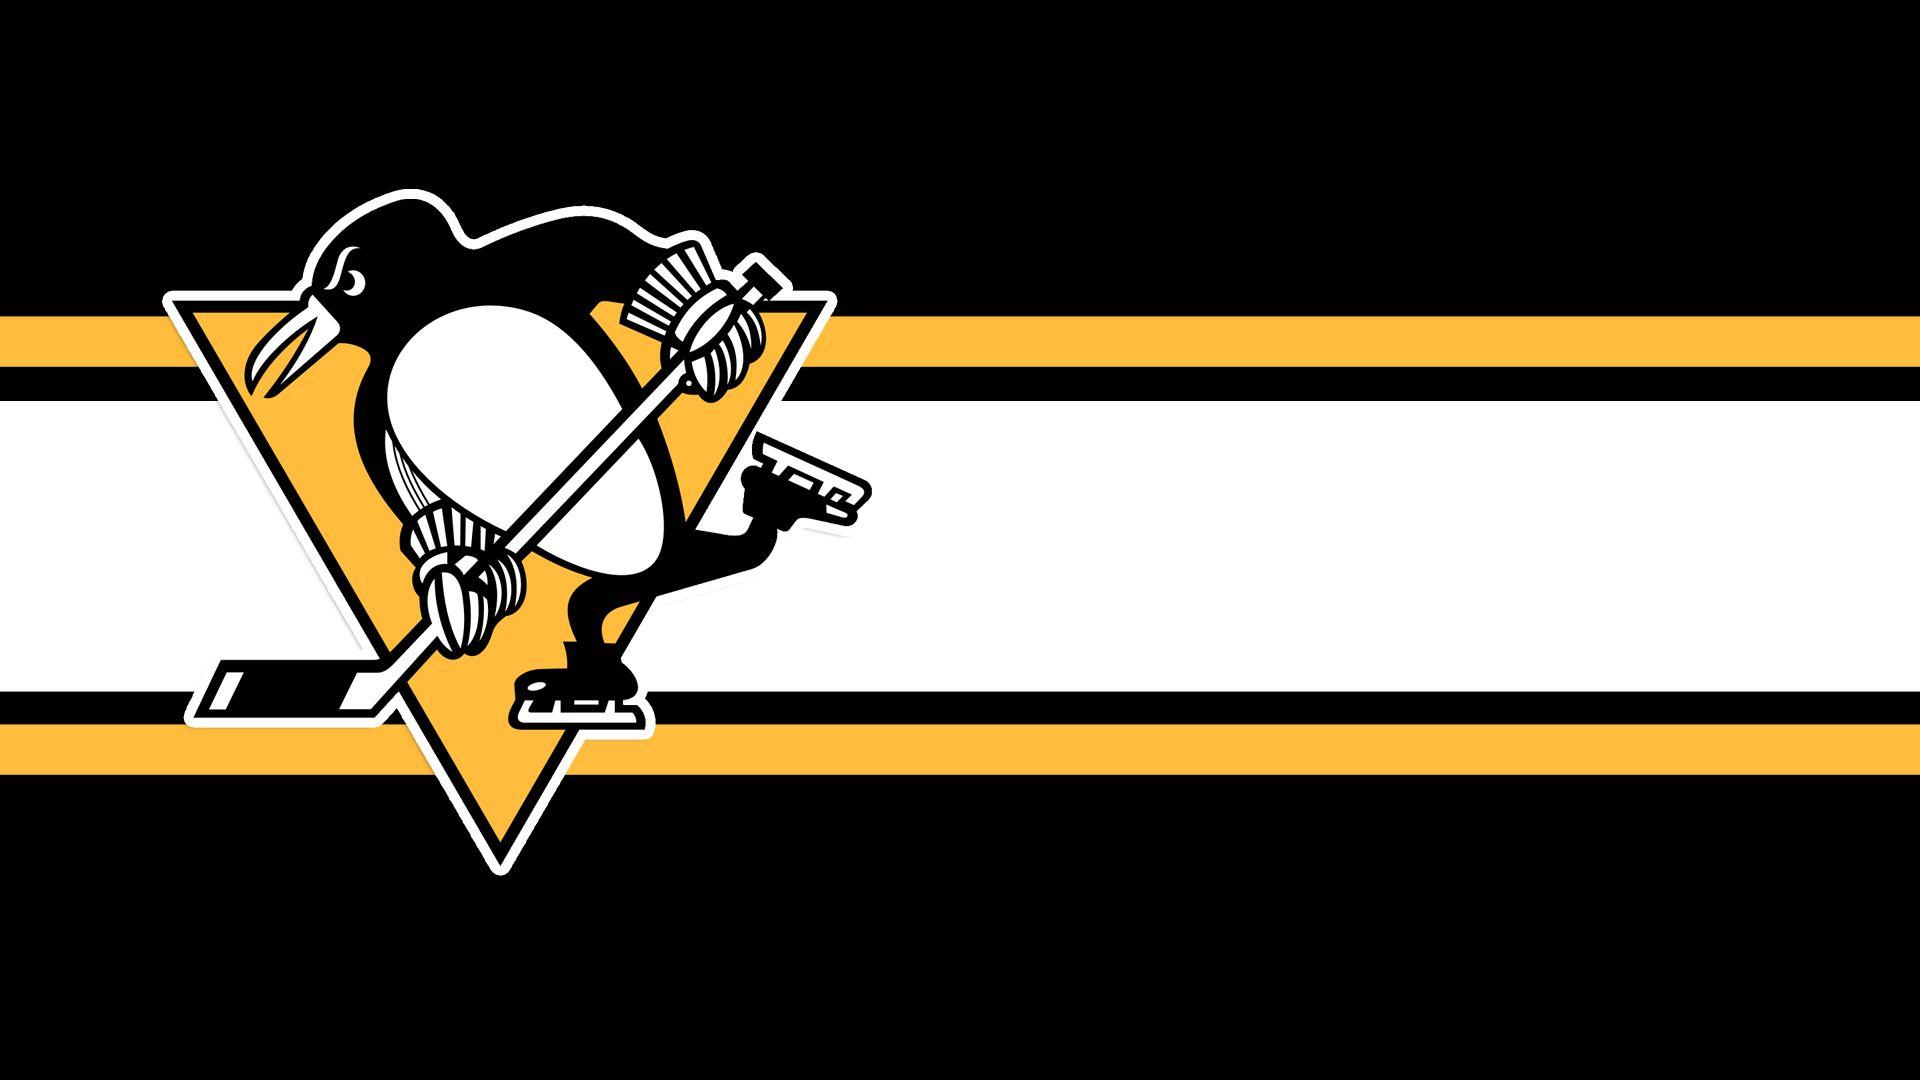 Penguins Logo - Images Pittsburgh Penguins Logo Wallpapers. | House ideas ...